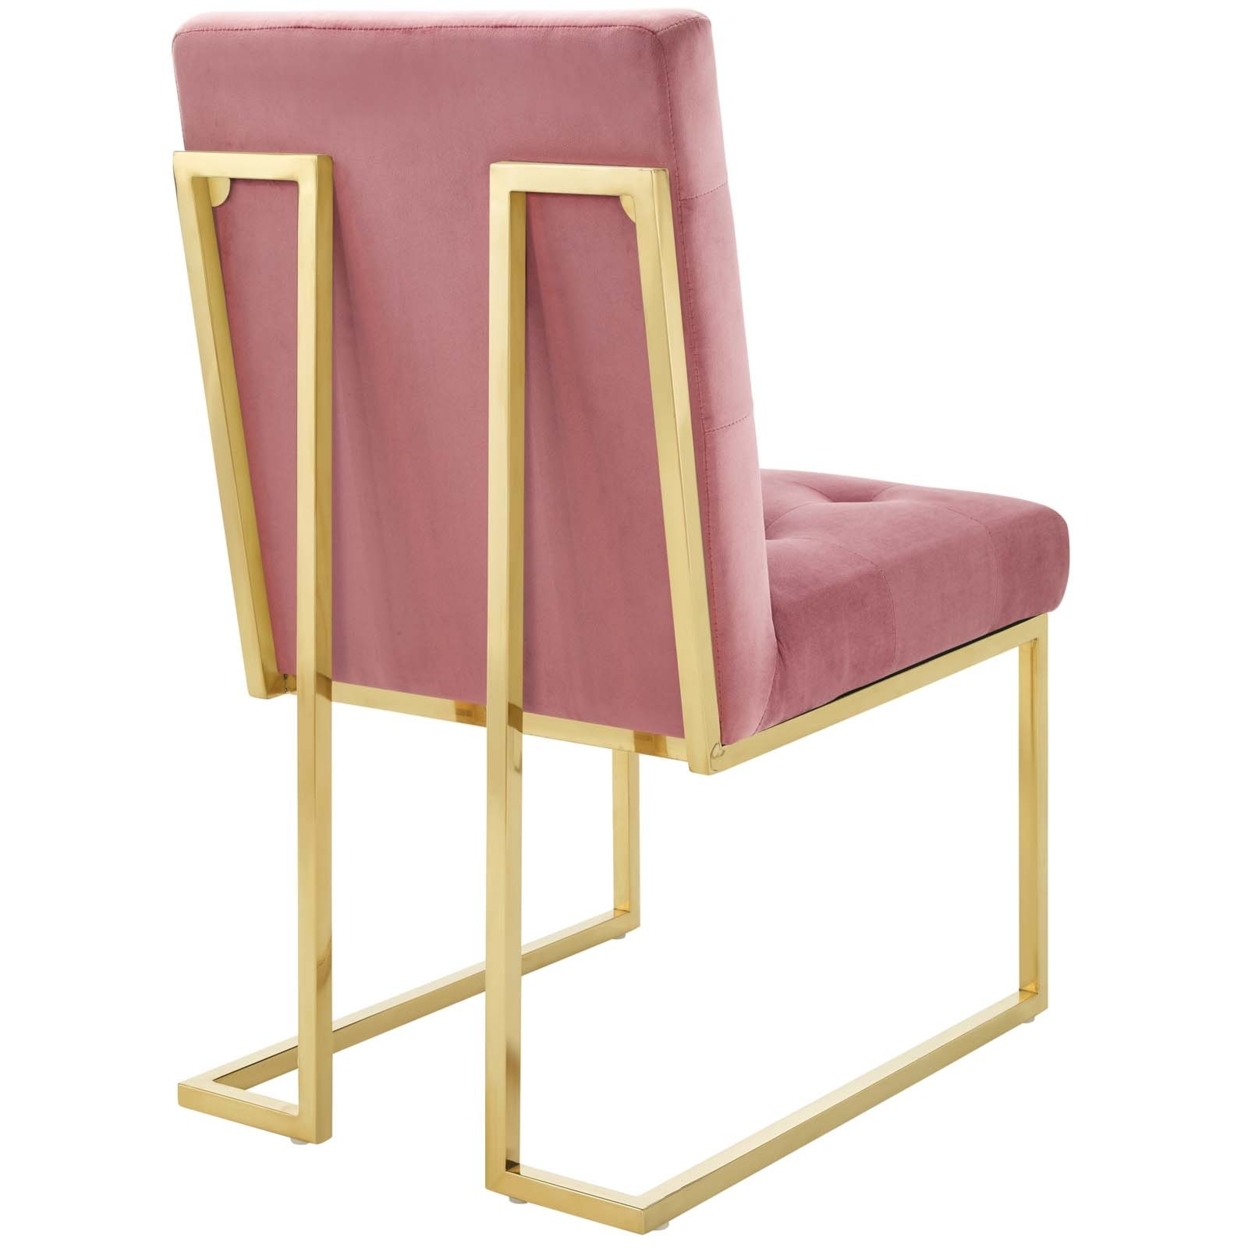 Privy Gold Stainless Steel Performance Velvet Dining Chair Set Of 2,Gold Dusty Rose